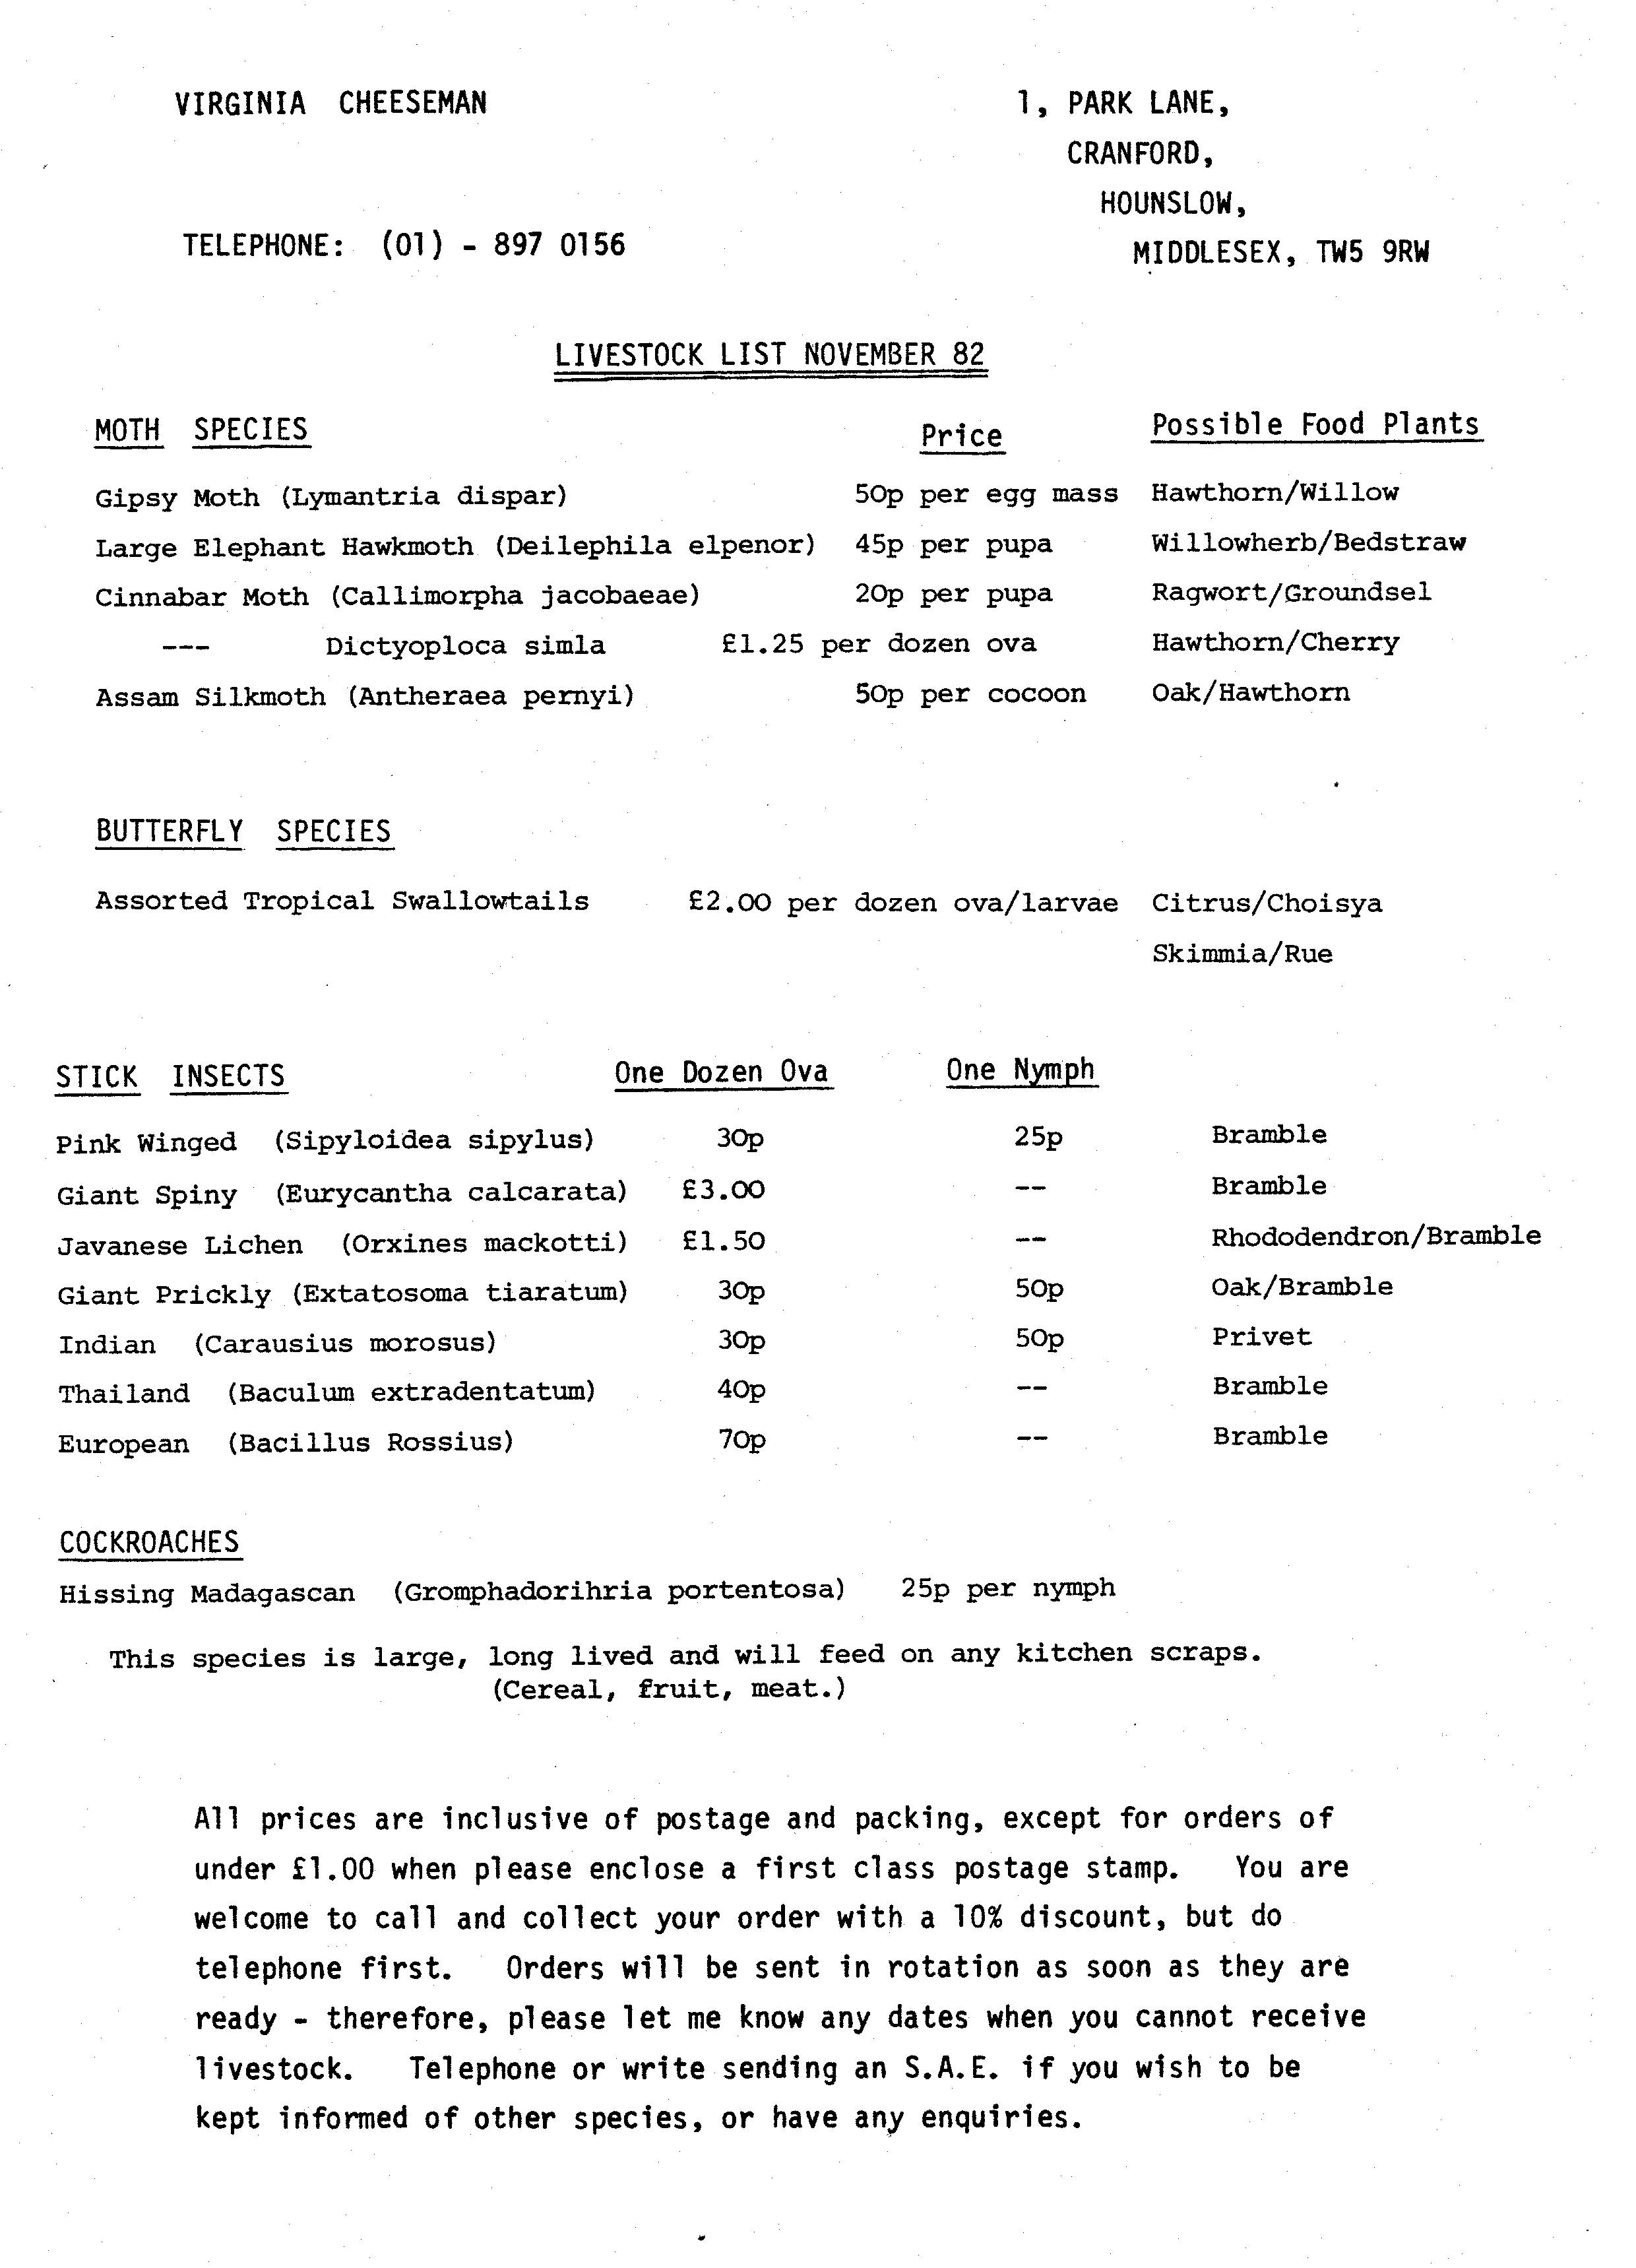 Price list from November 1982